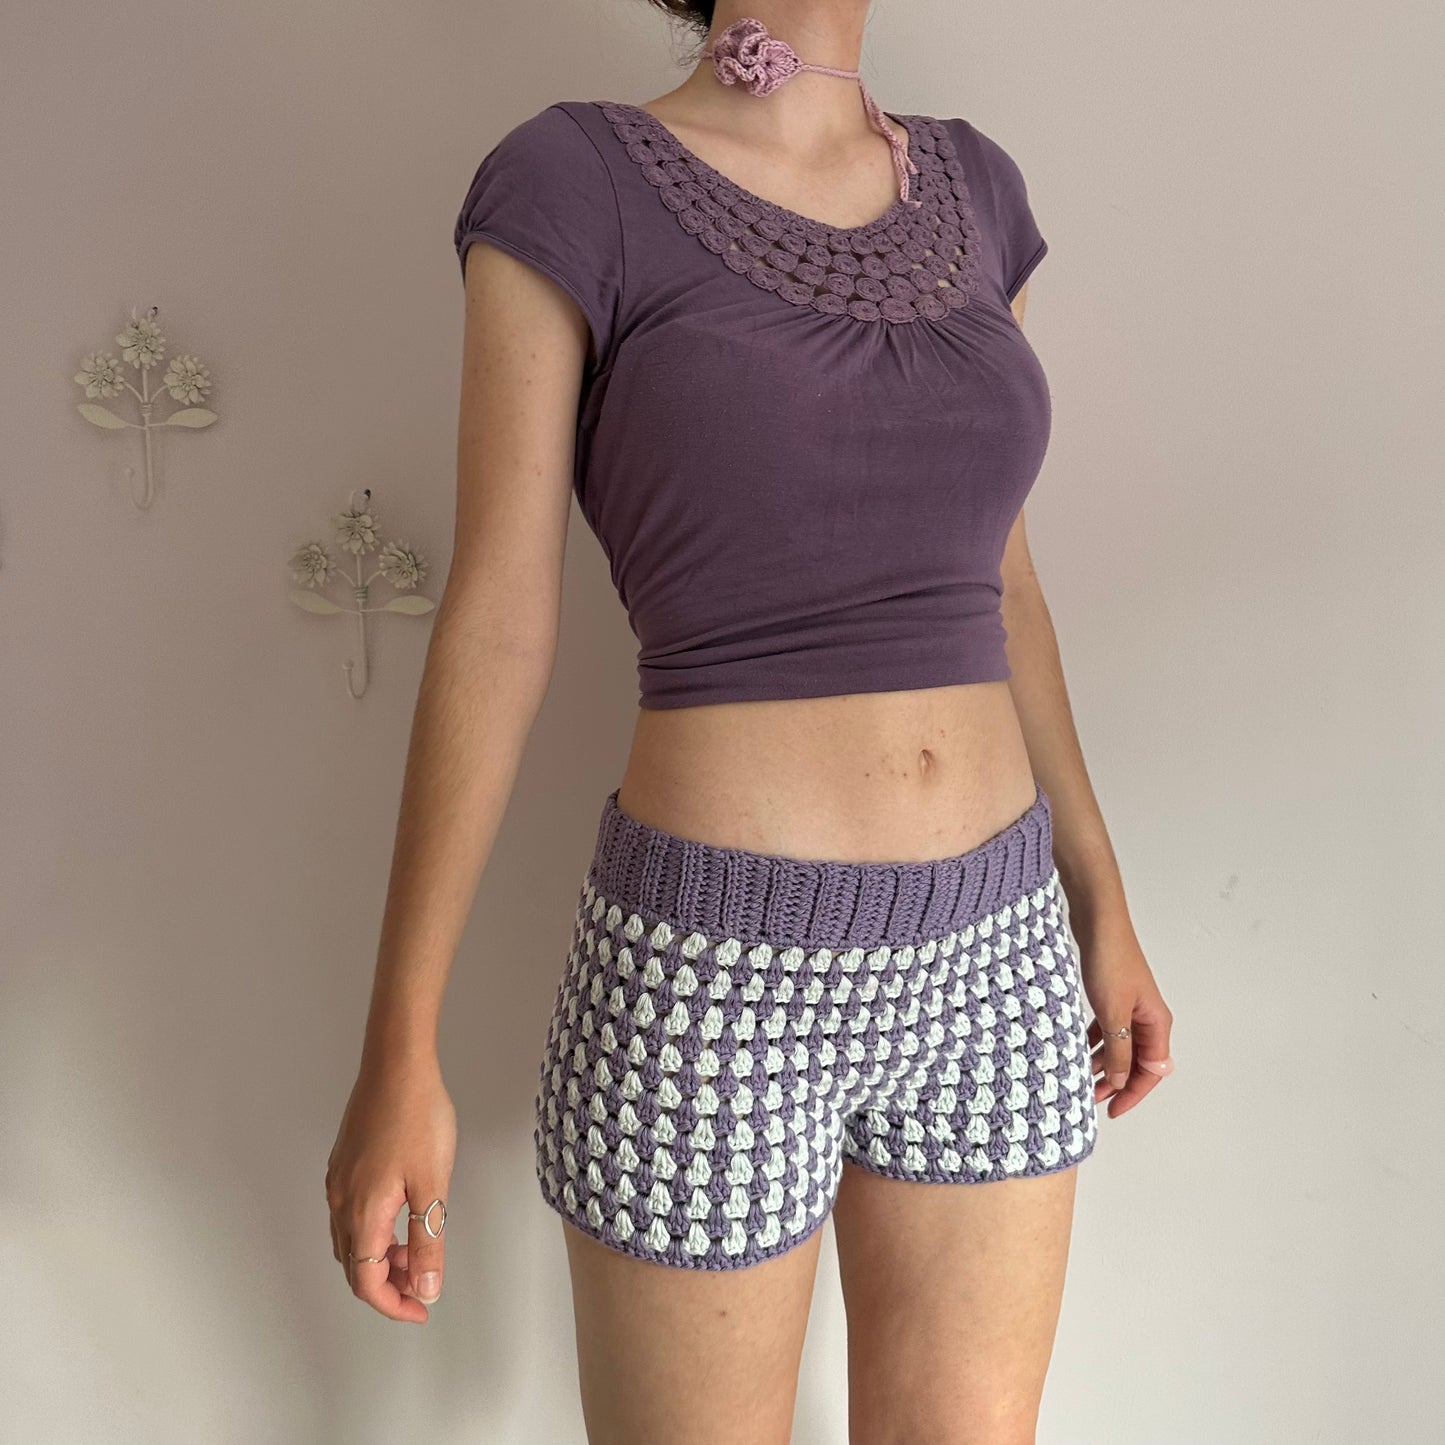 Handmade gingham crochet shorts in purple and duck egg blue